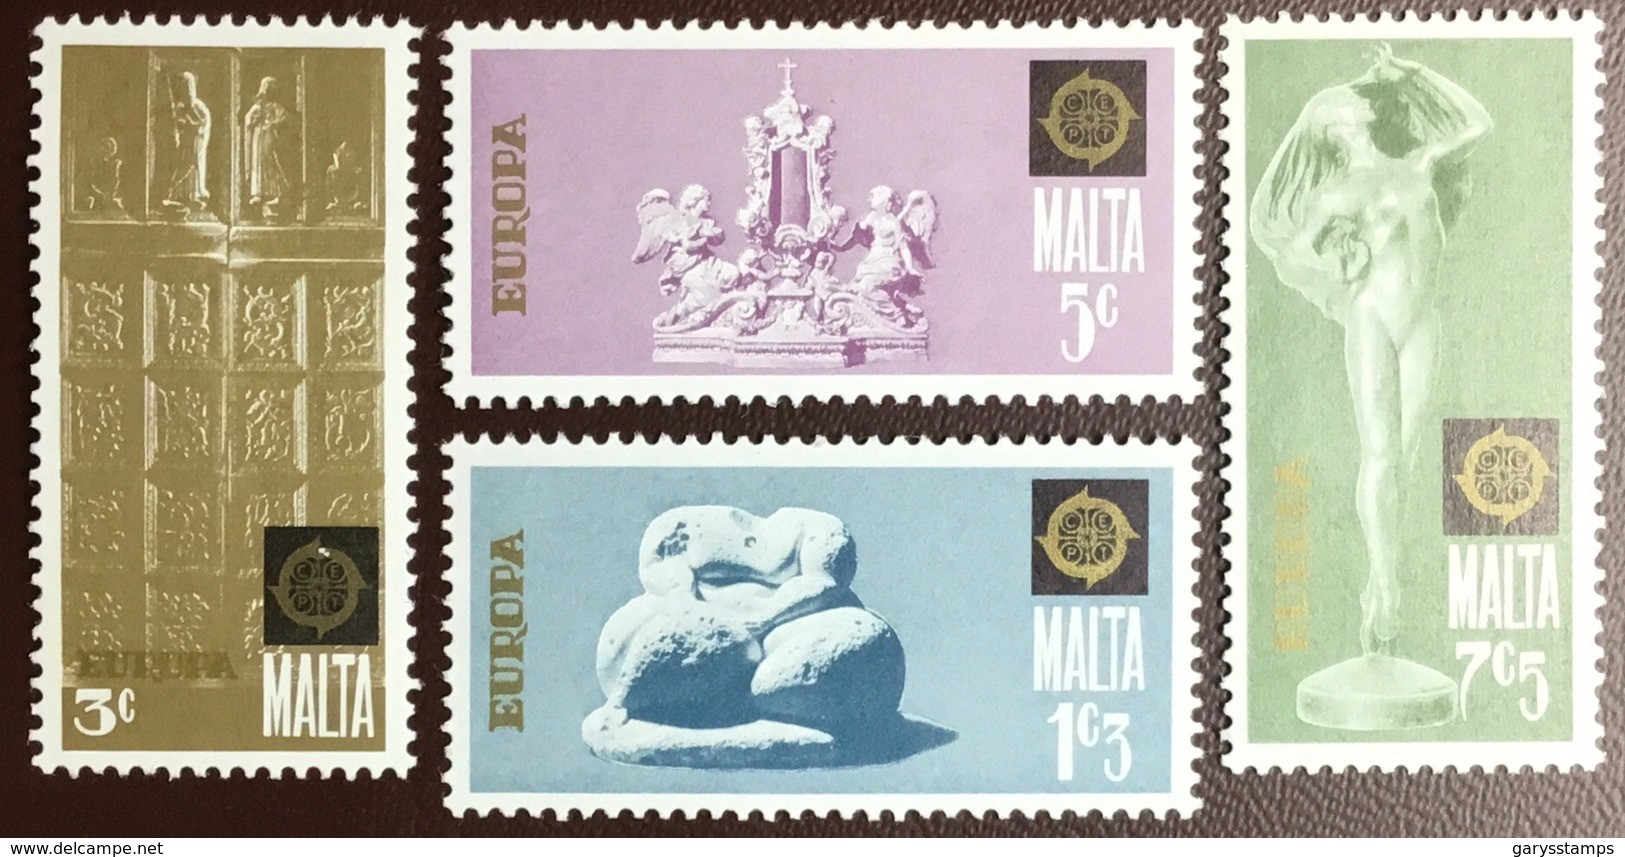 Malta 1974 Europa MNH - Malte